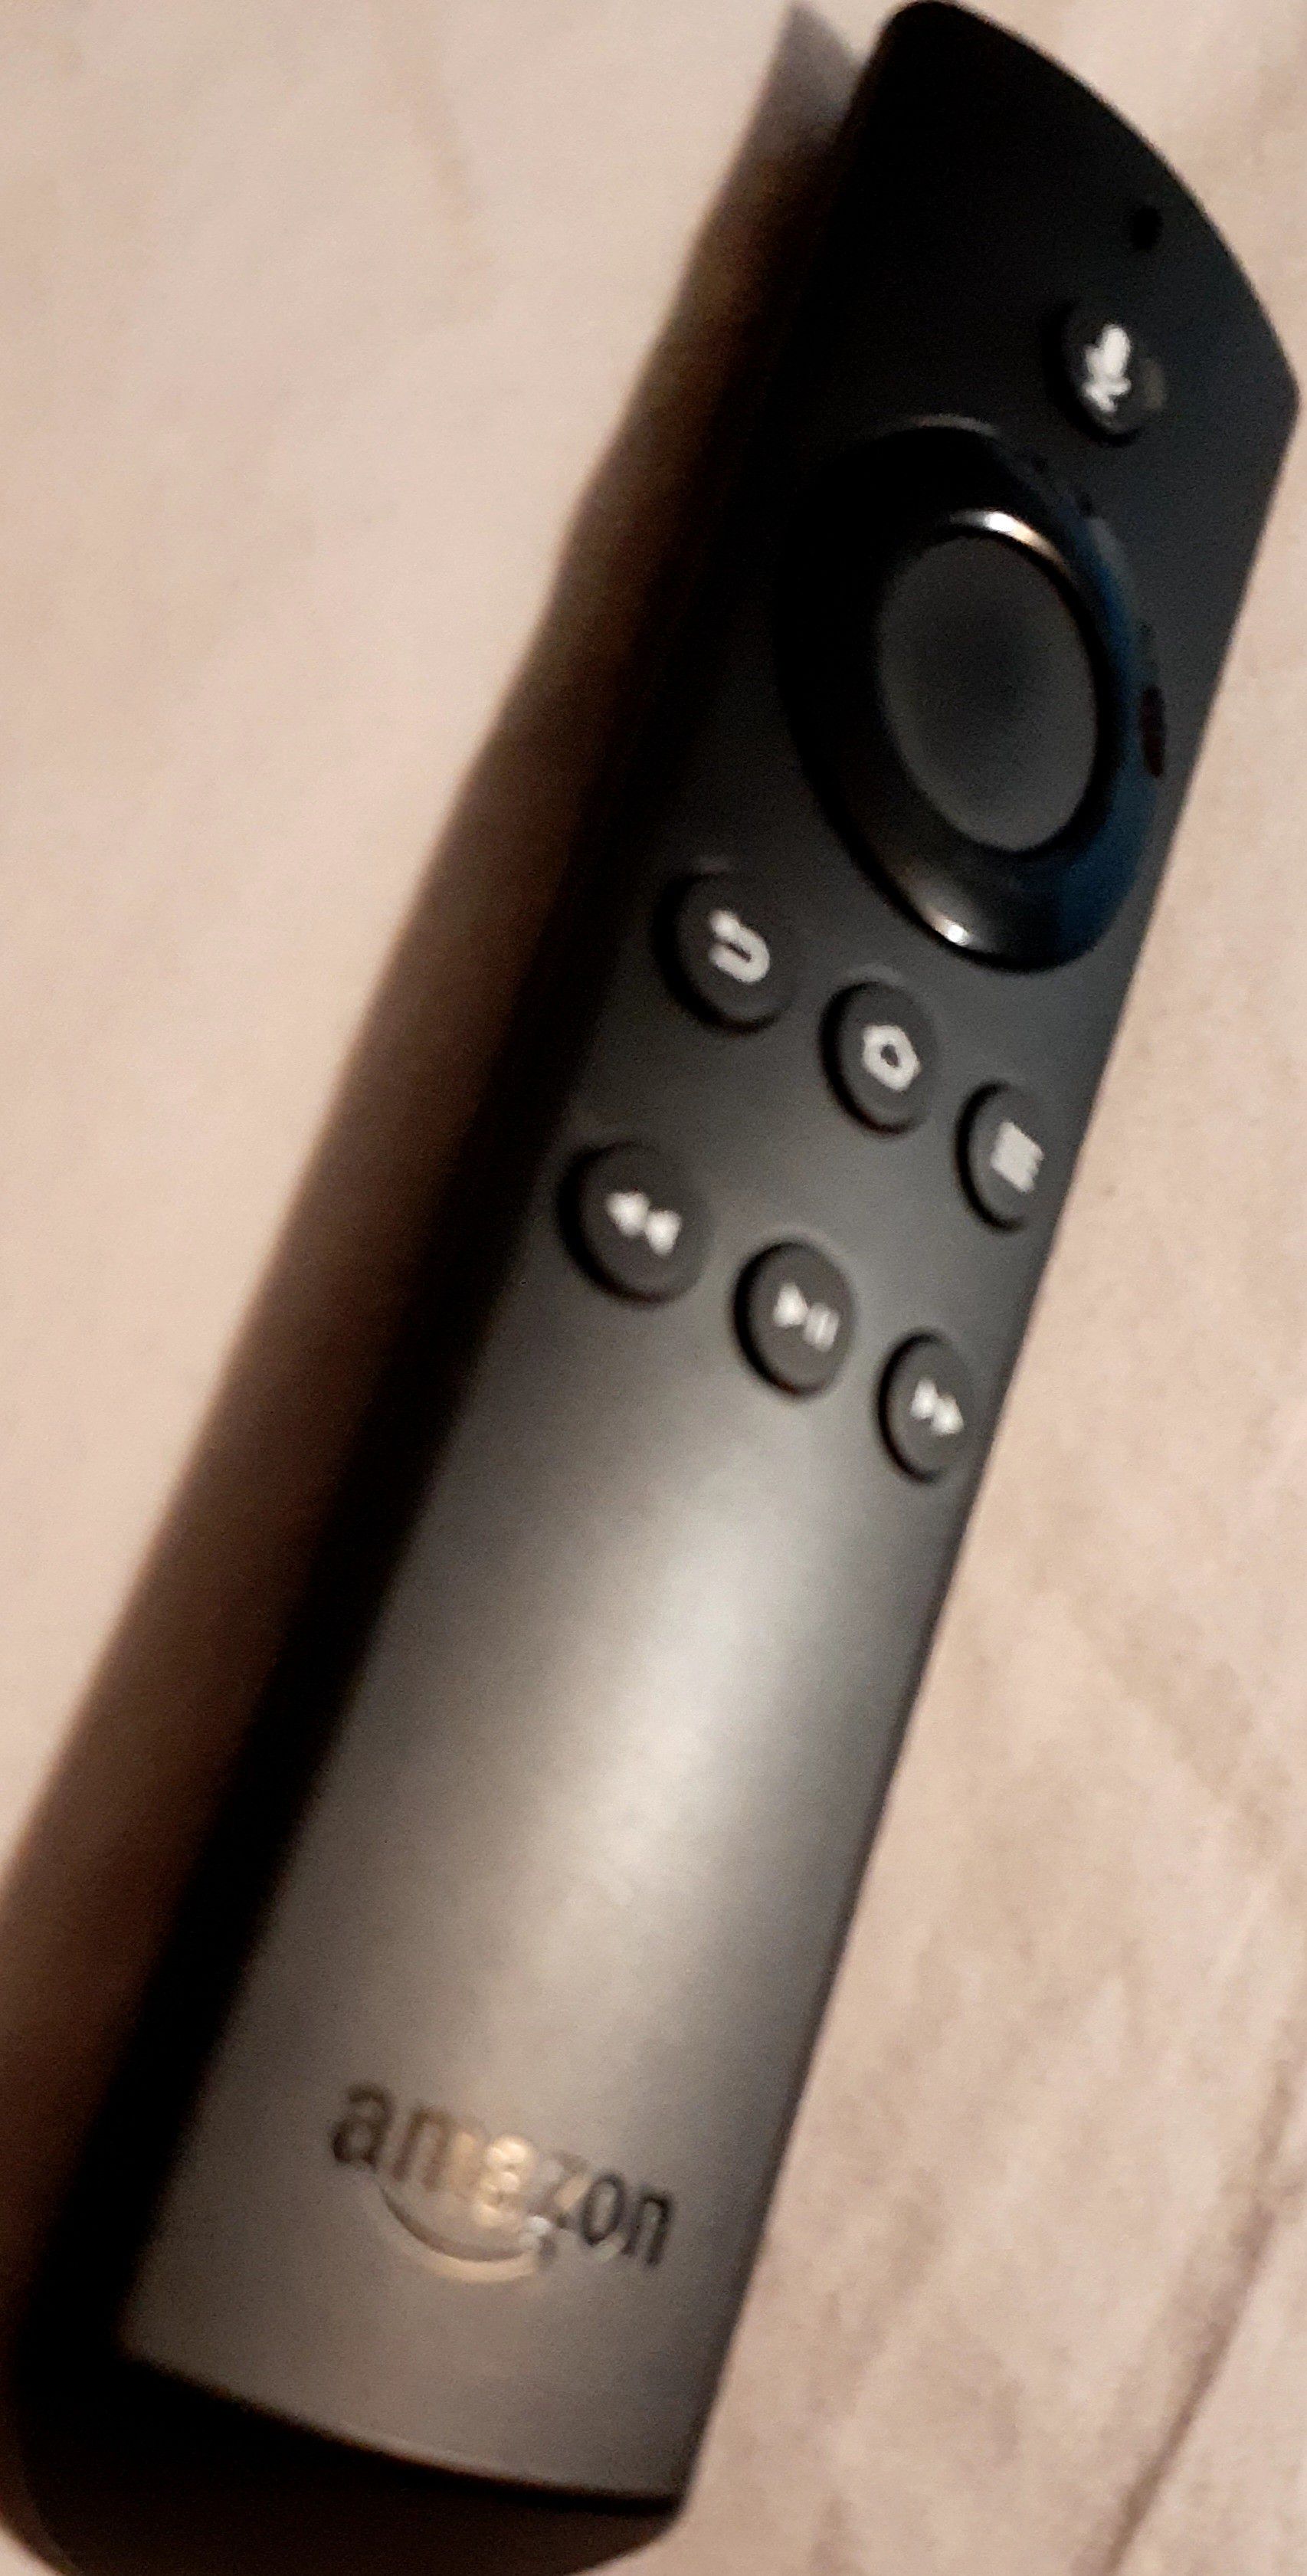 Amazon Firestick fire tv Alexa remote perfect for spare controller, Retail $27.99